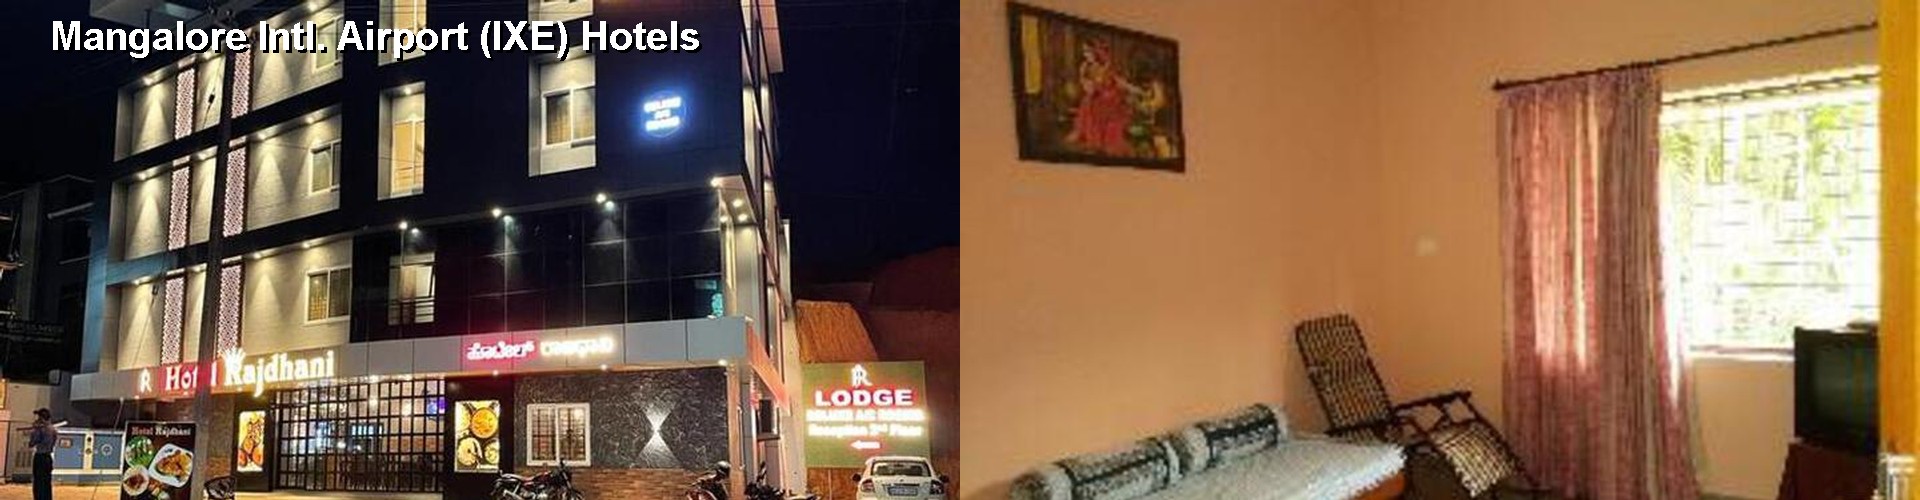 3 Best Hotels near Mangalore Intl. Airport (IXE)